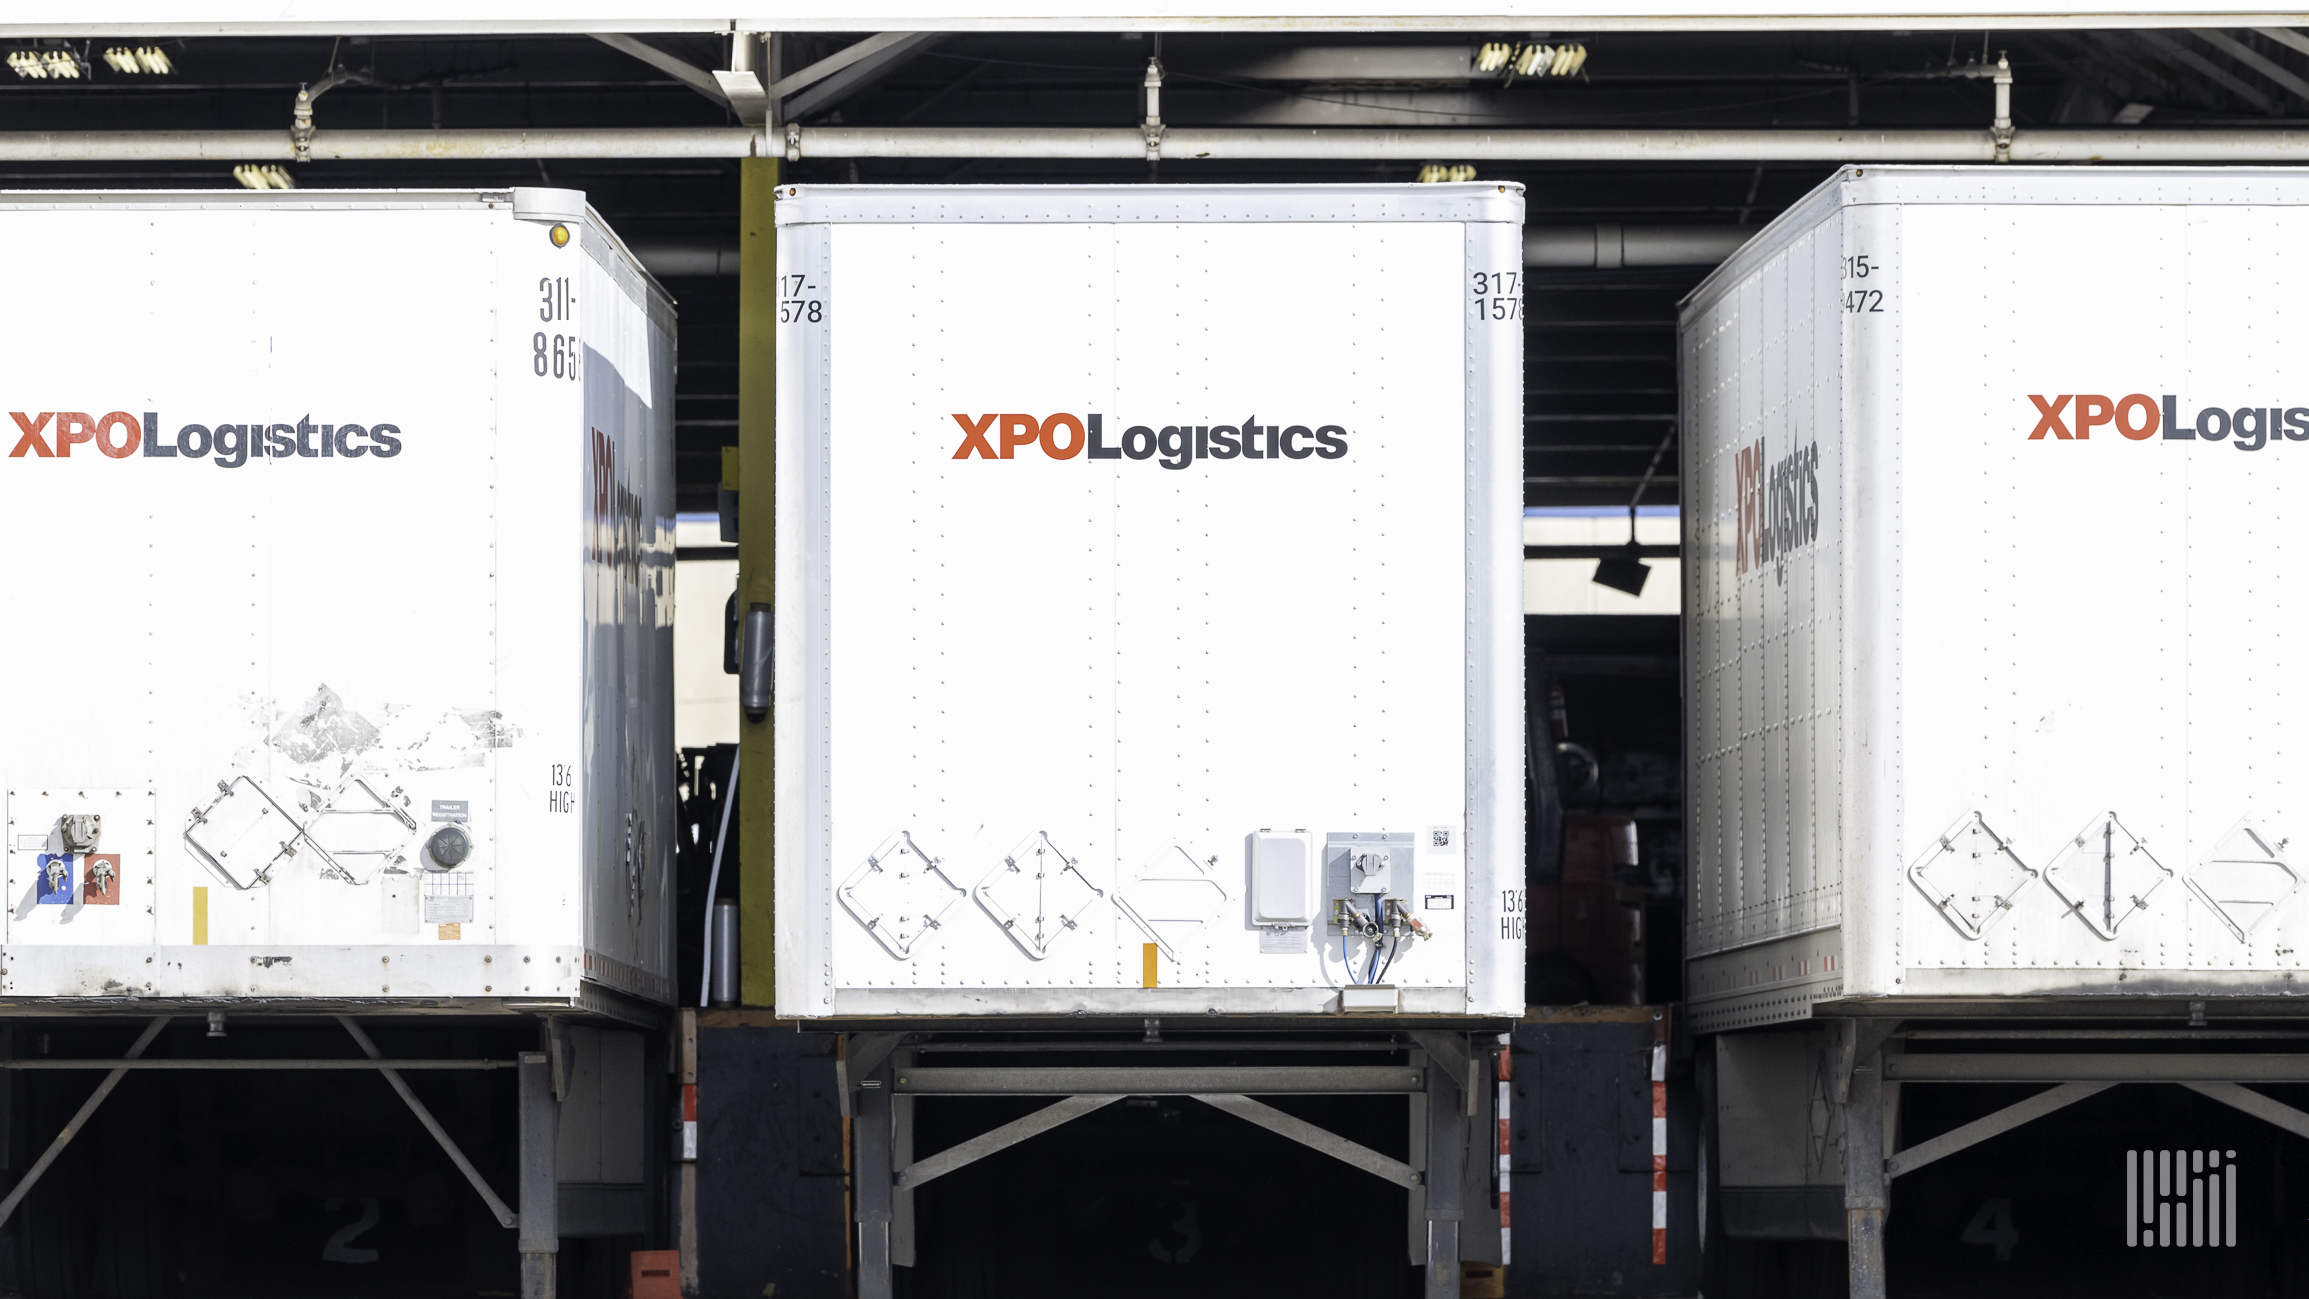 XPO Logistics trailers